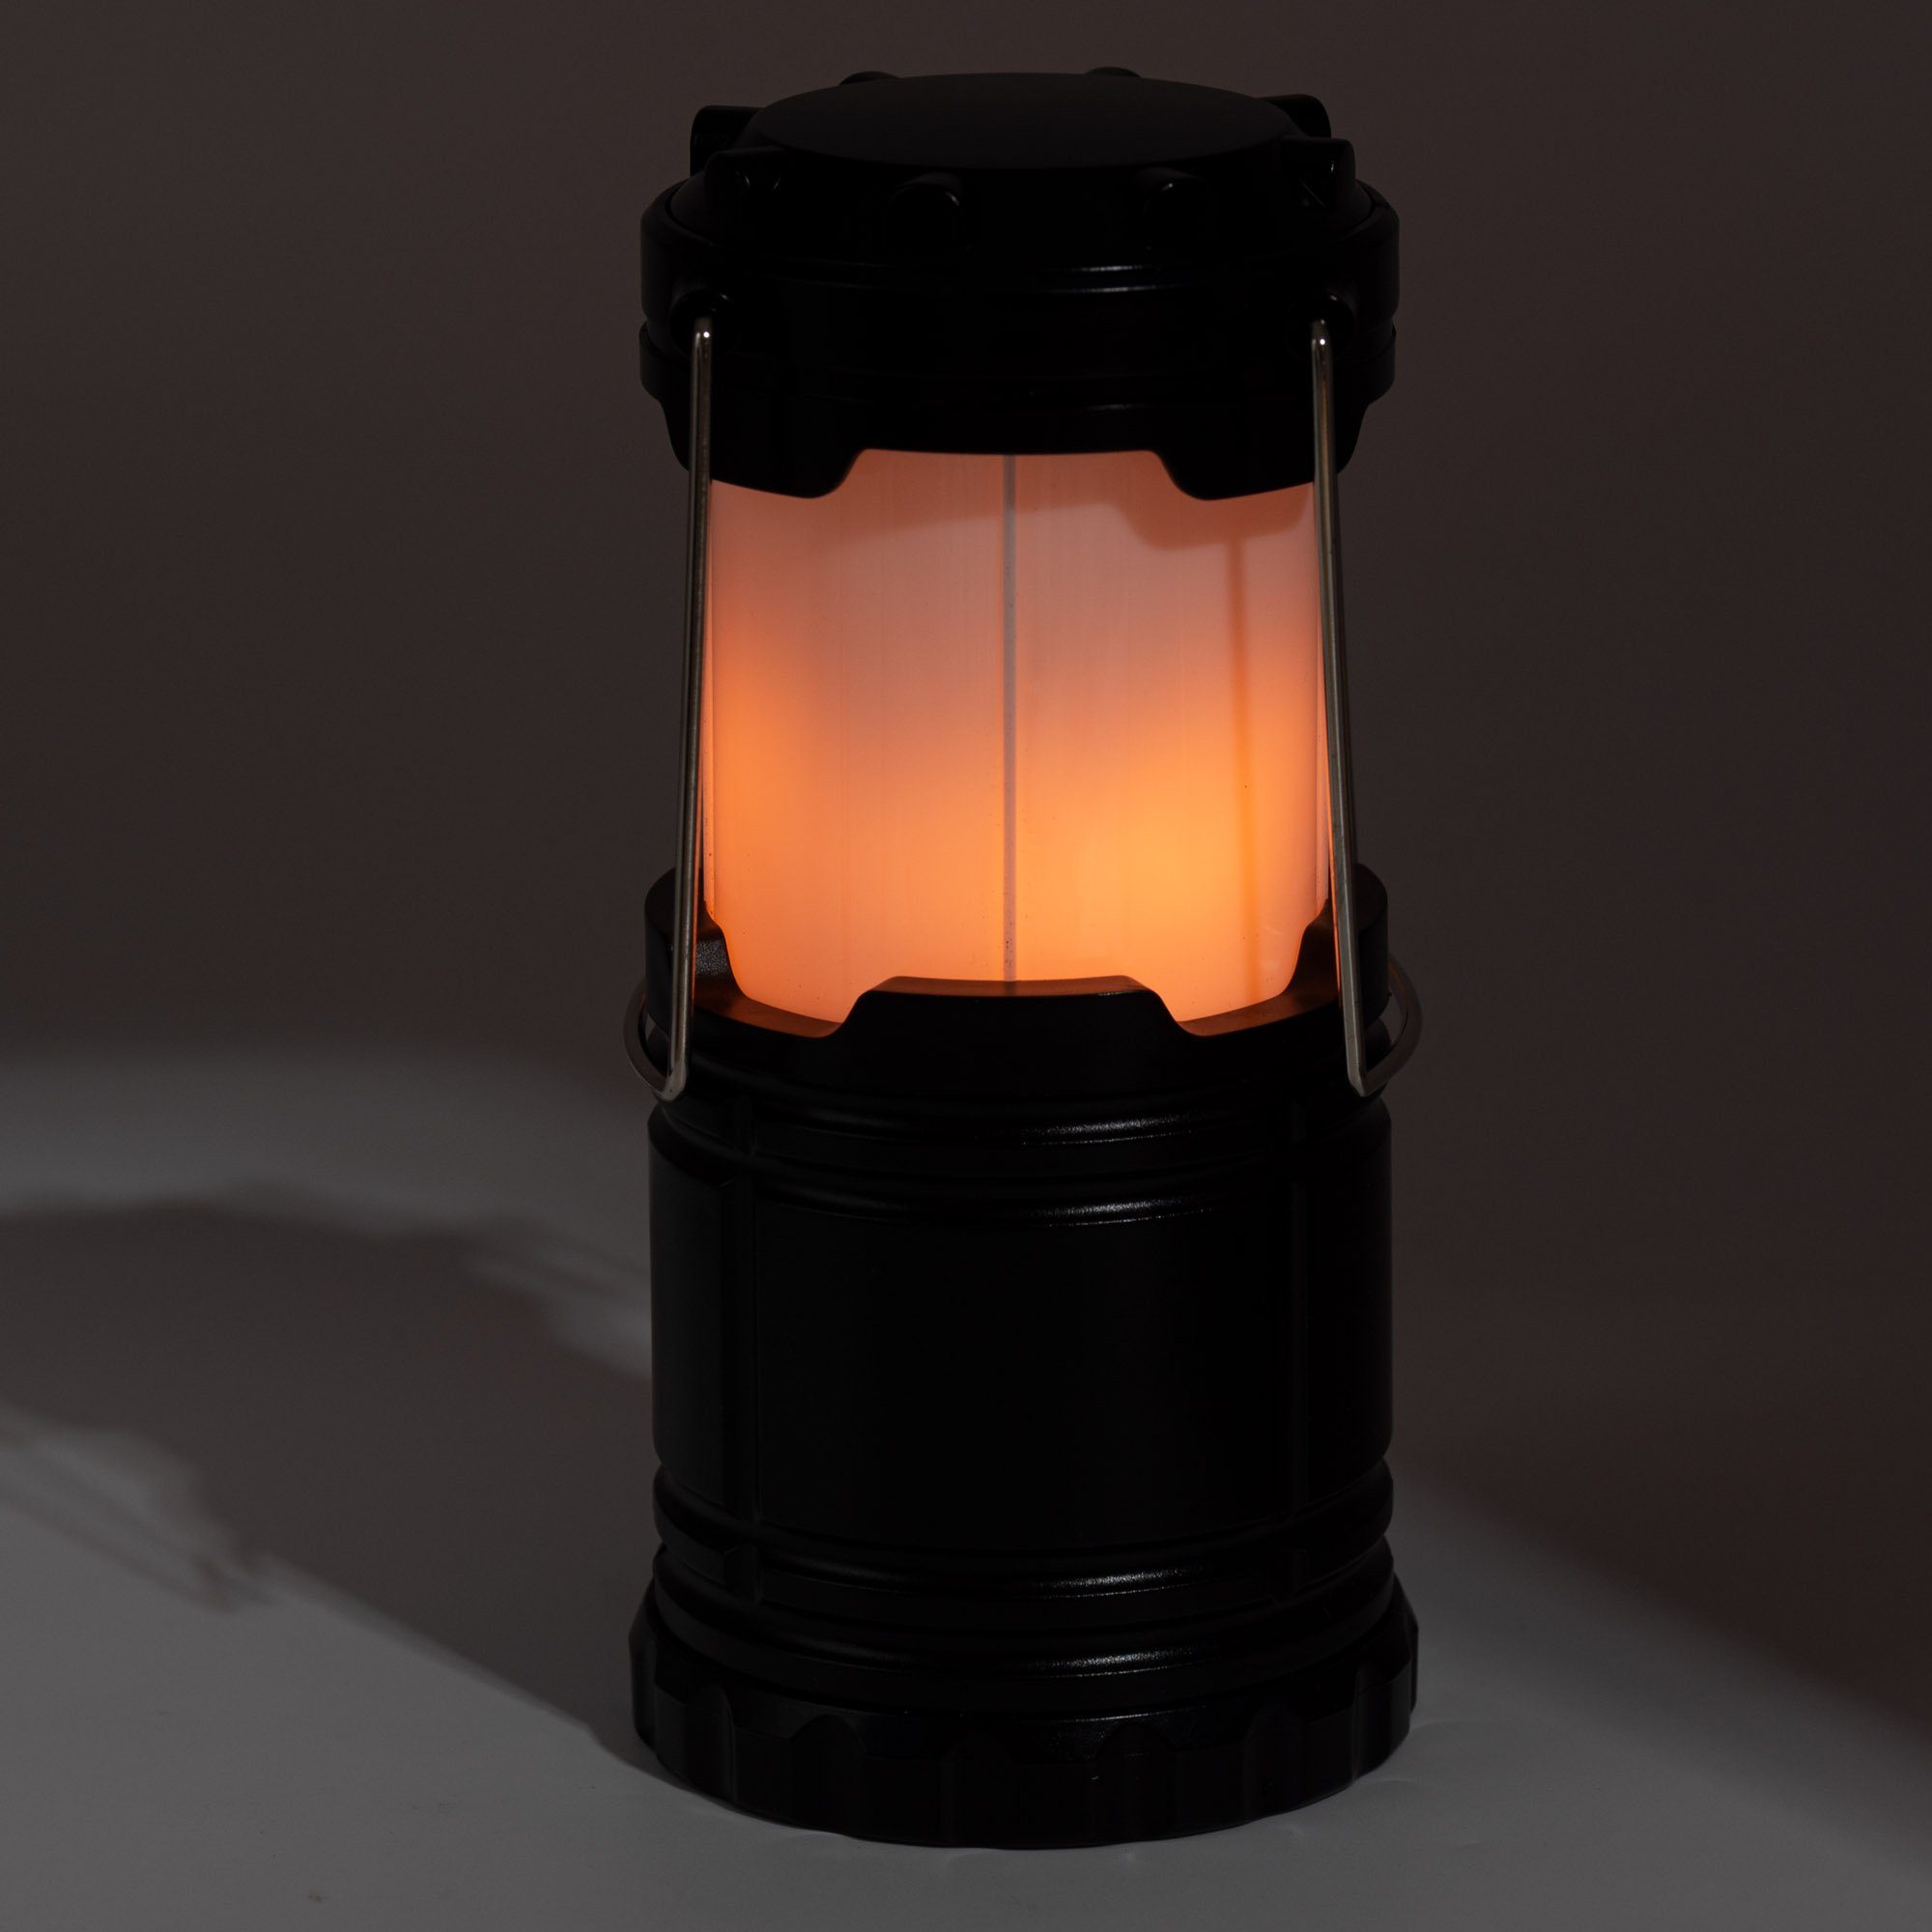 Lampe 2in1 Leuchte Zelt Laterne, Garten, Batterie, Taschenlampe Campinglampe BENSON Flammen, Effekt LED